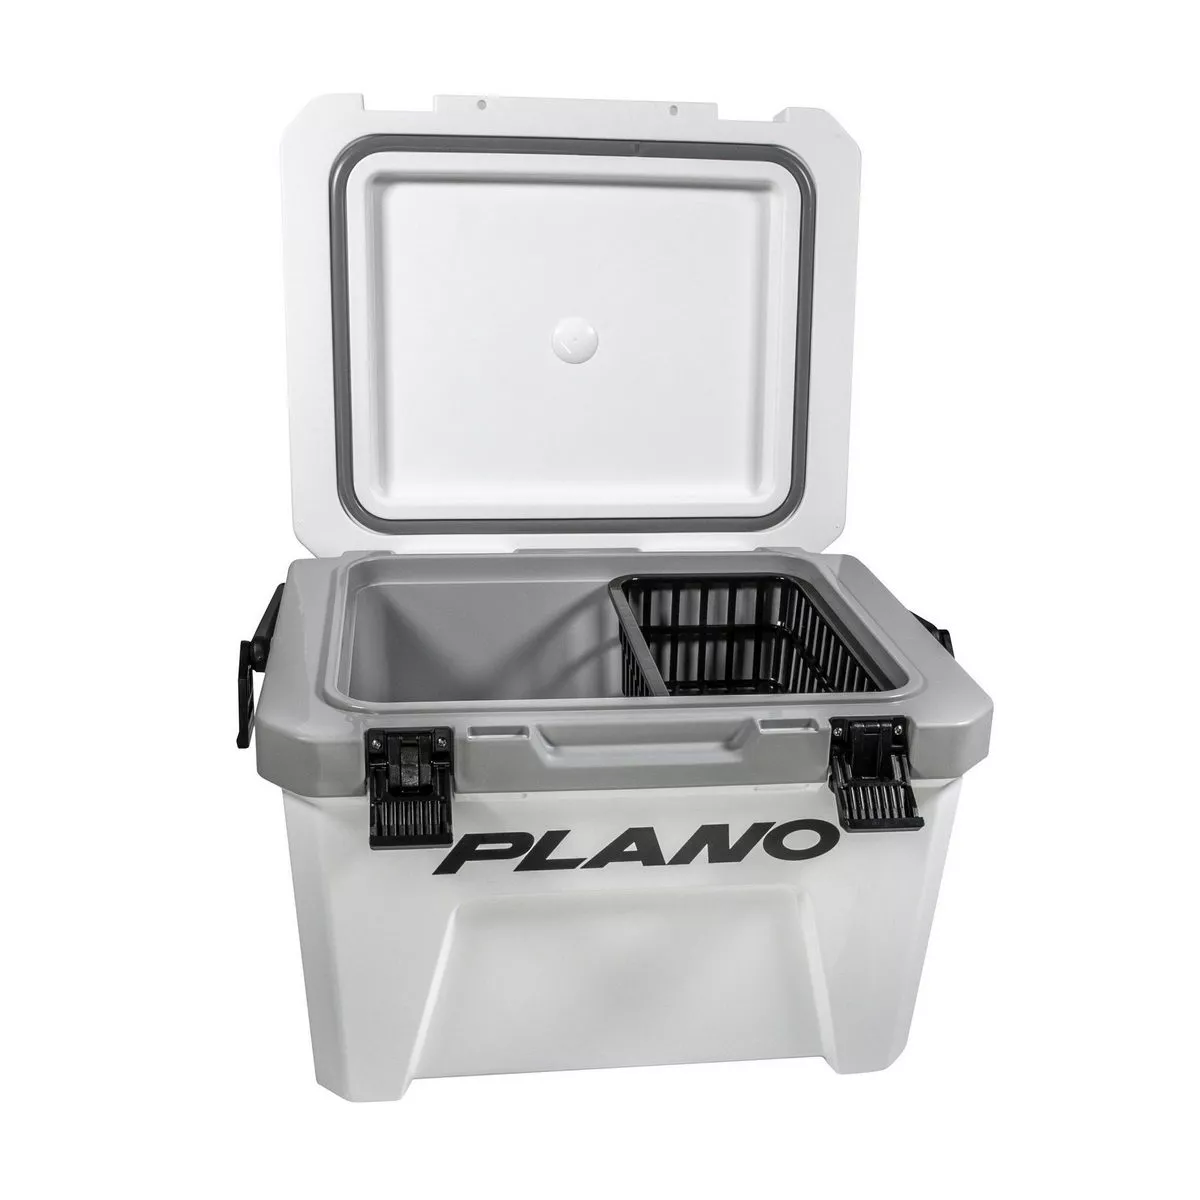 PLANO Frost Külbox 14 Liter PLAC1450 Cooler 14 QT